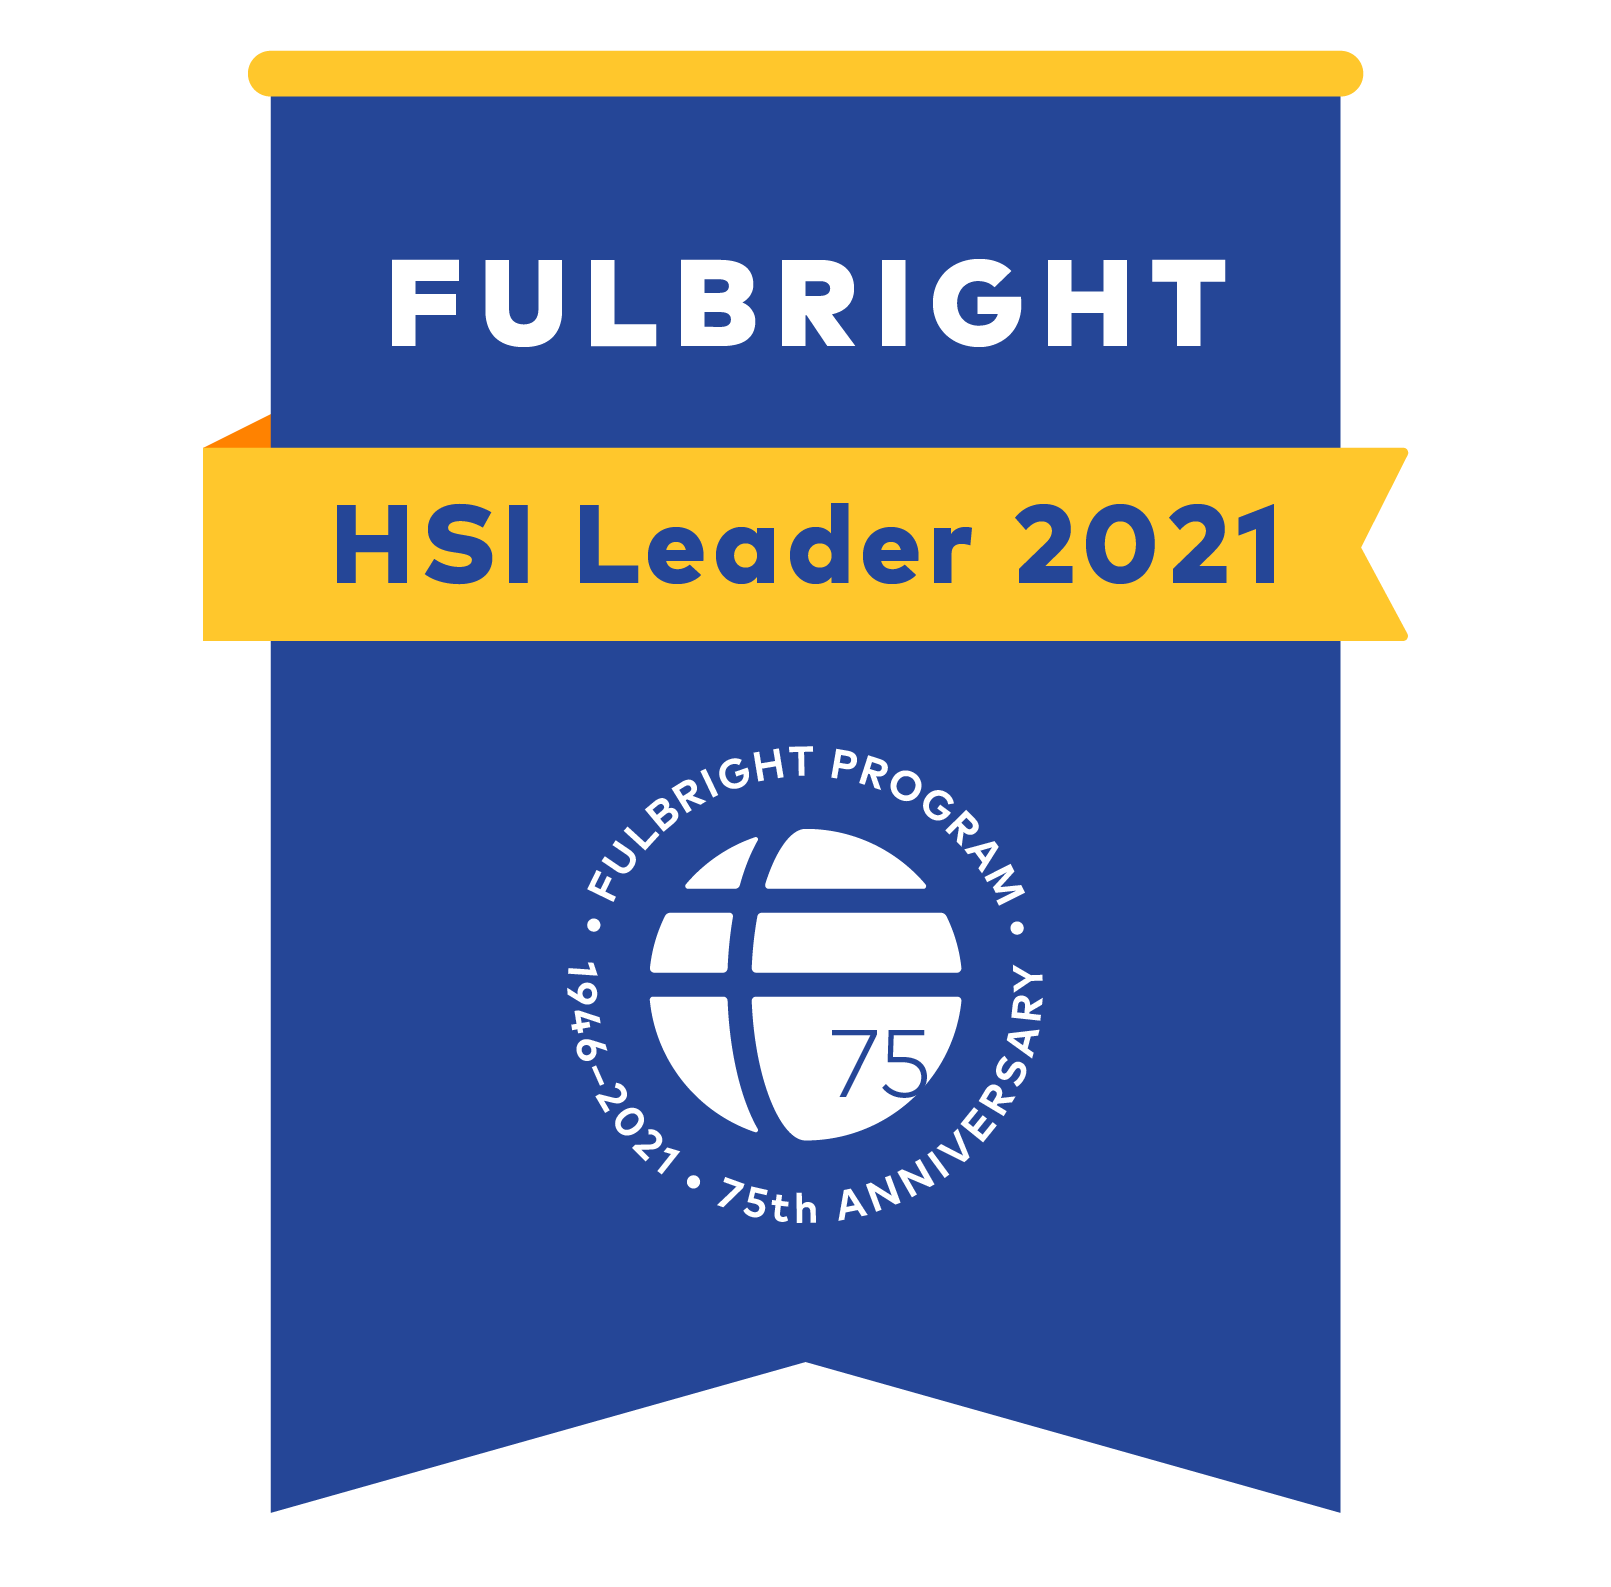 Fulbright HSI Leader badge